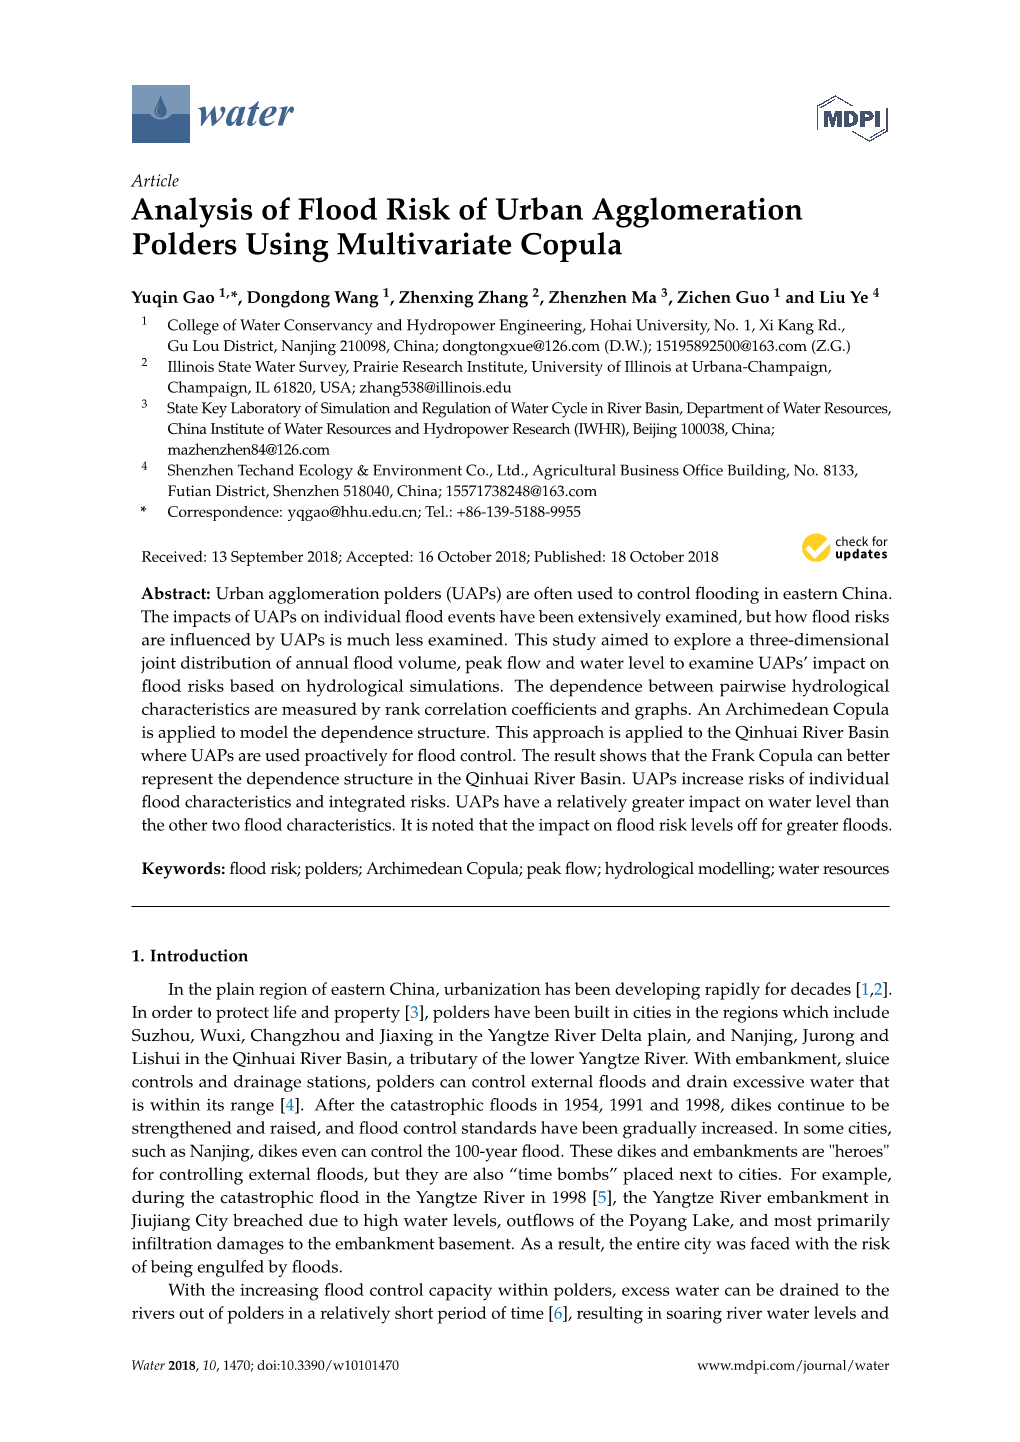 Analysis of Flood Risk of Urban Agglomeration Polders Using Multivariate Copula